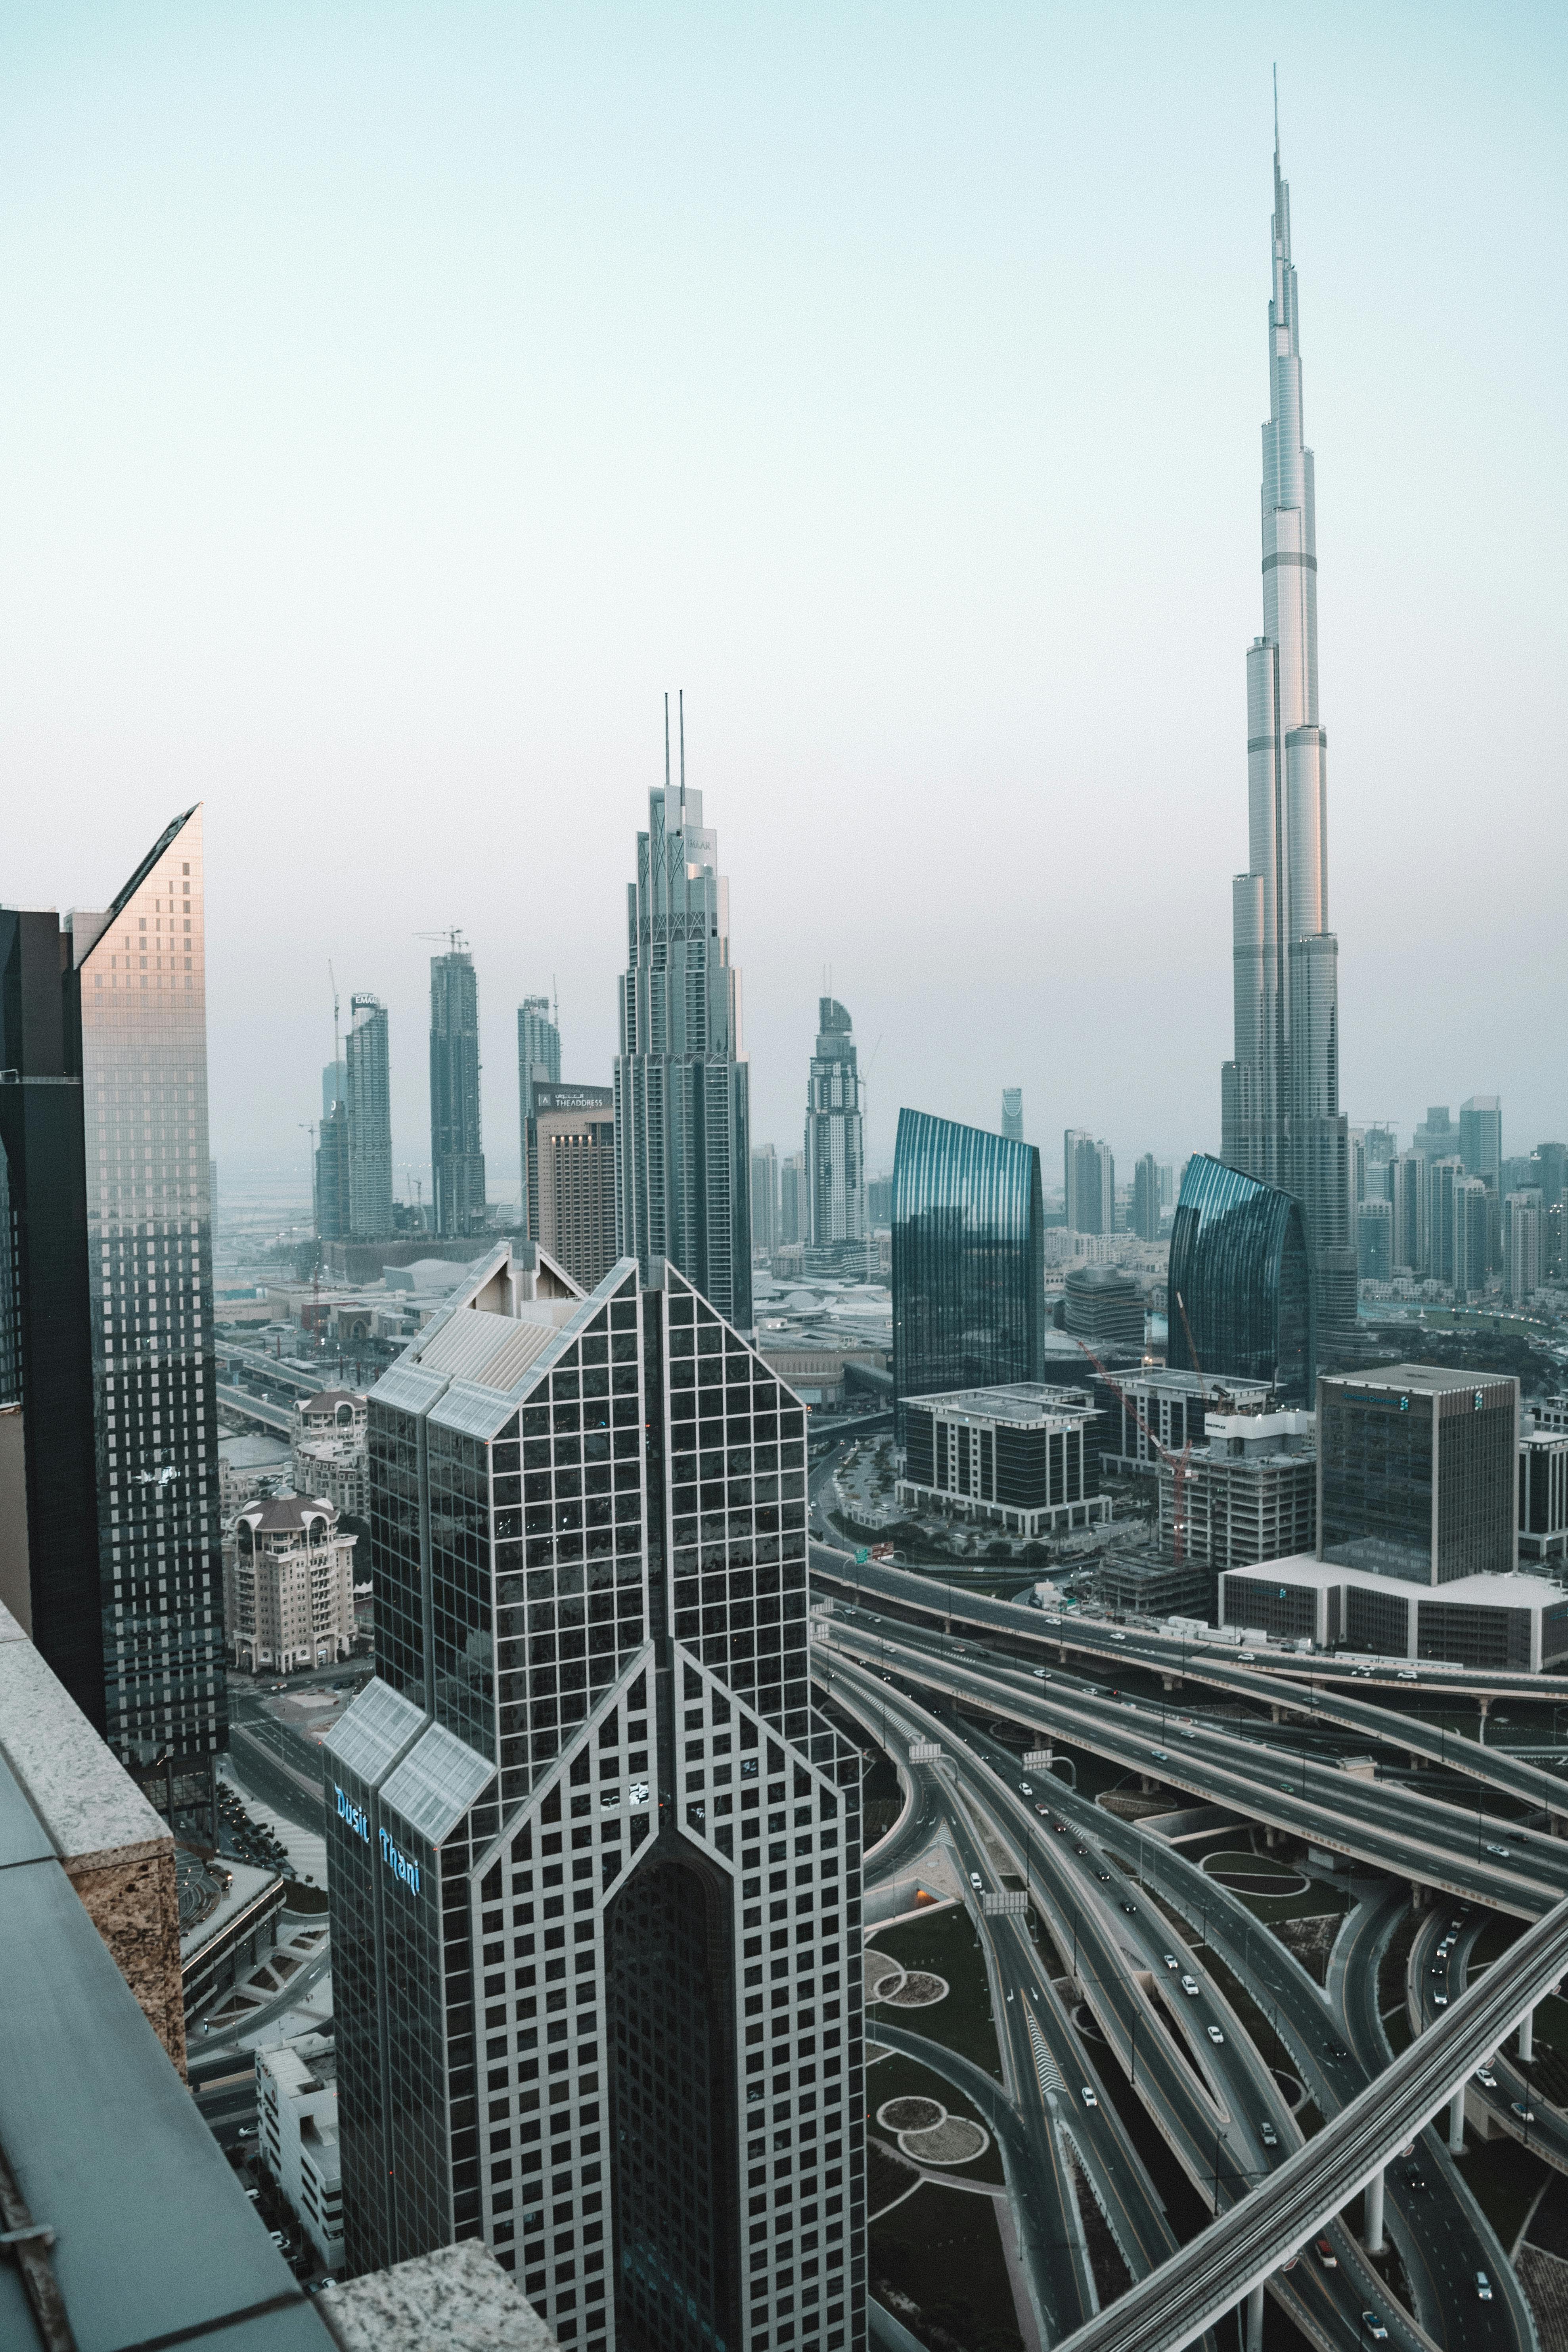 999+ Burj Khalifa Tower Pictures | Download Free Images on Unsplash